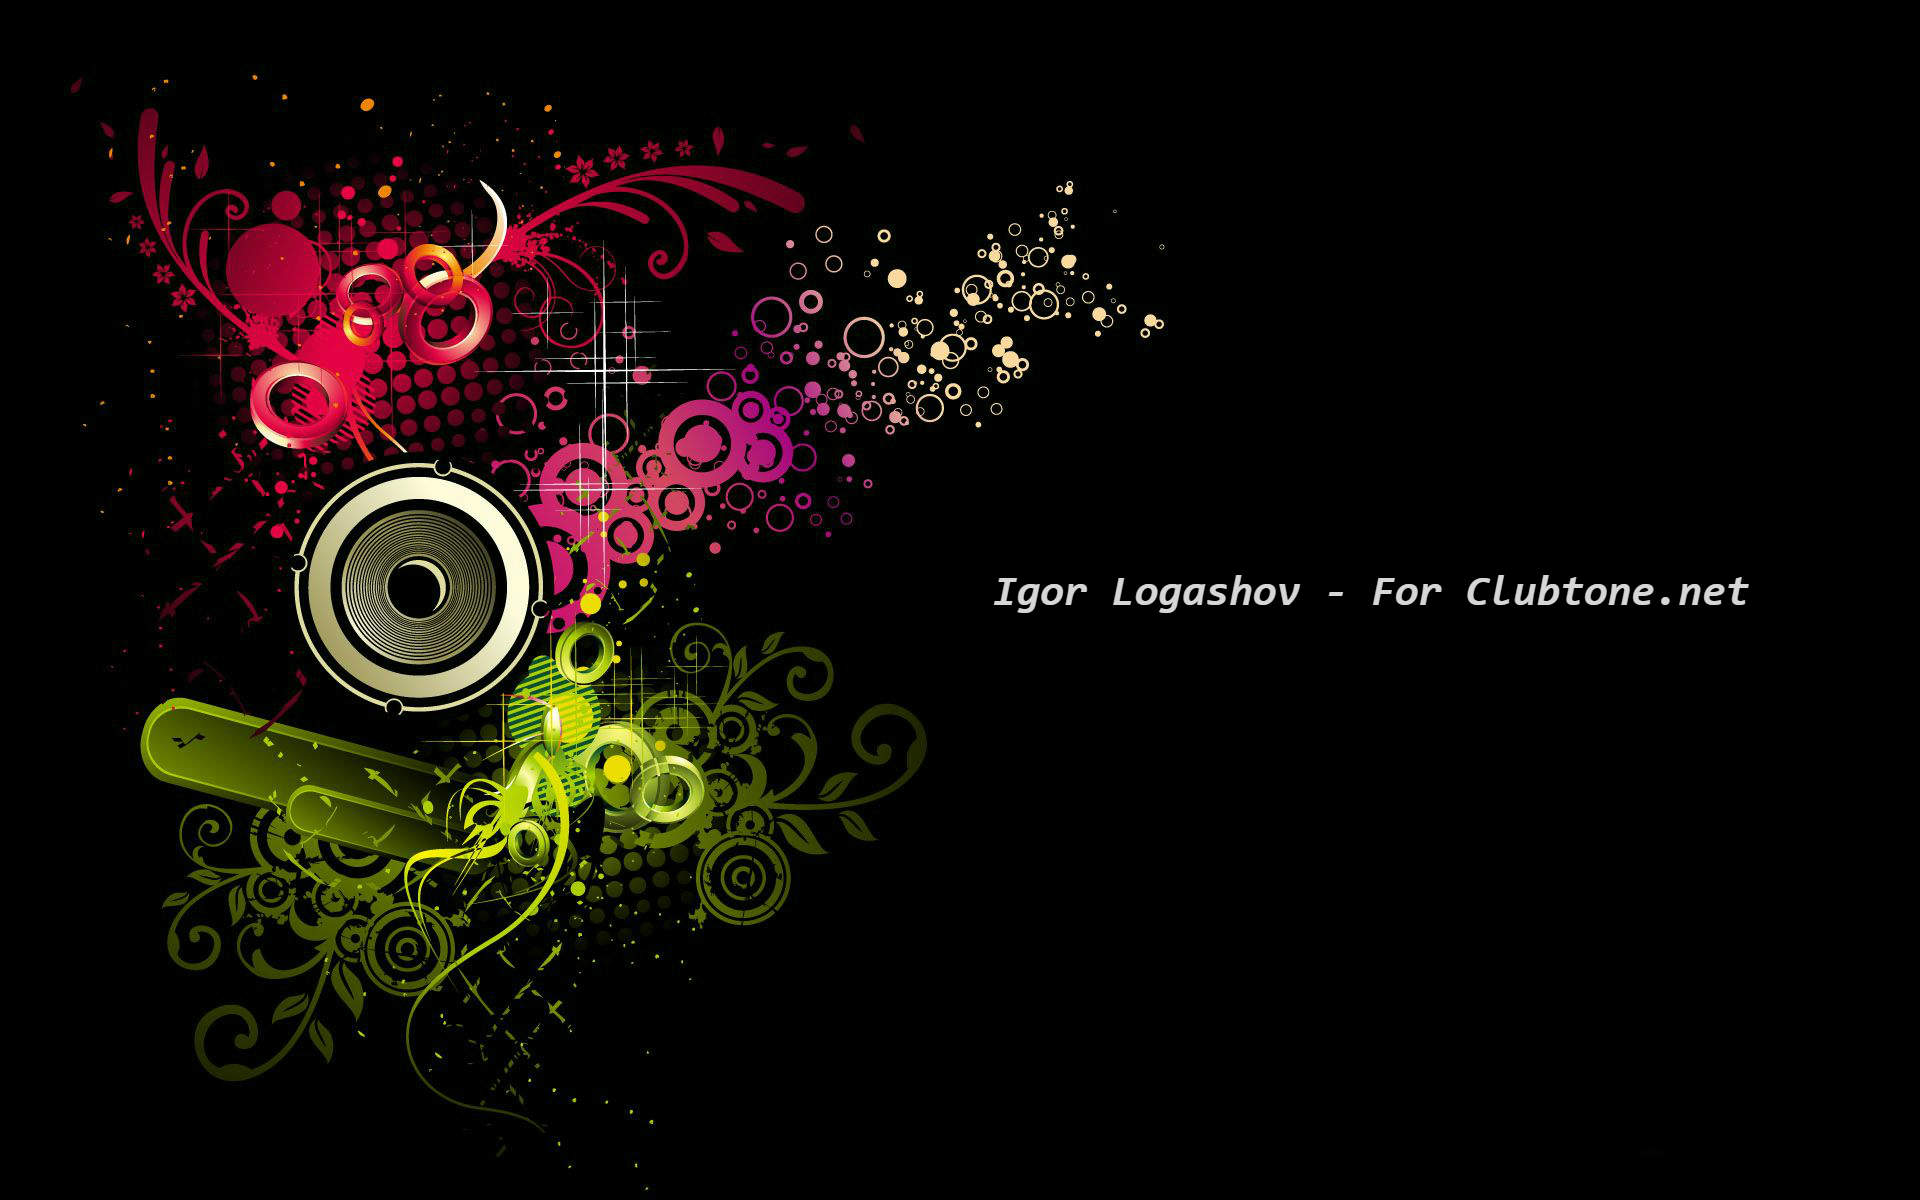 Igor Logashov - For Clubtone.net